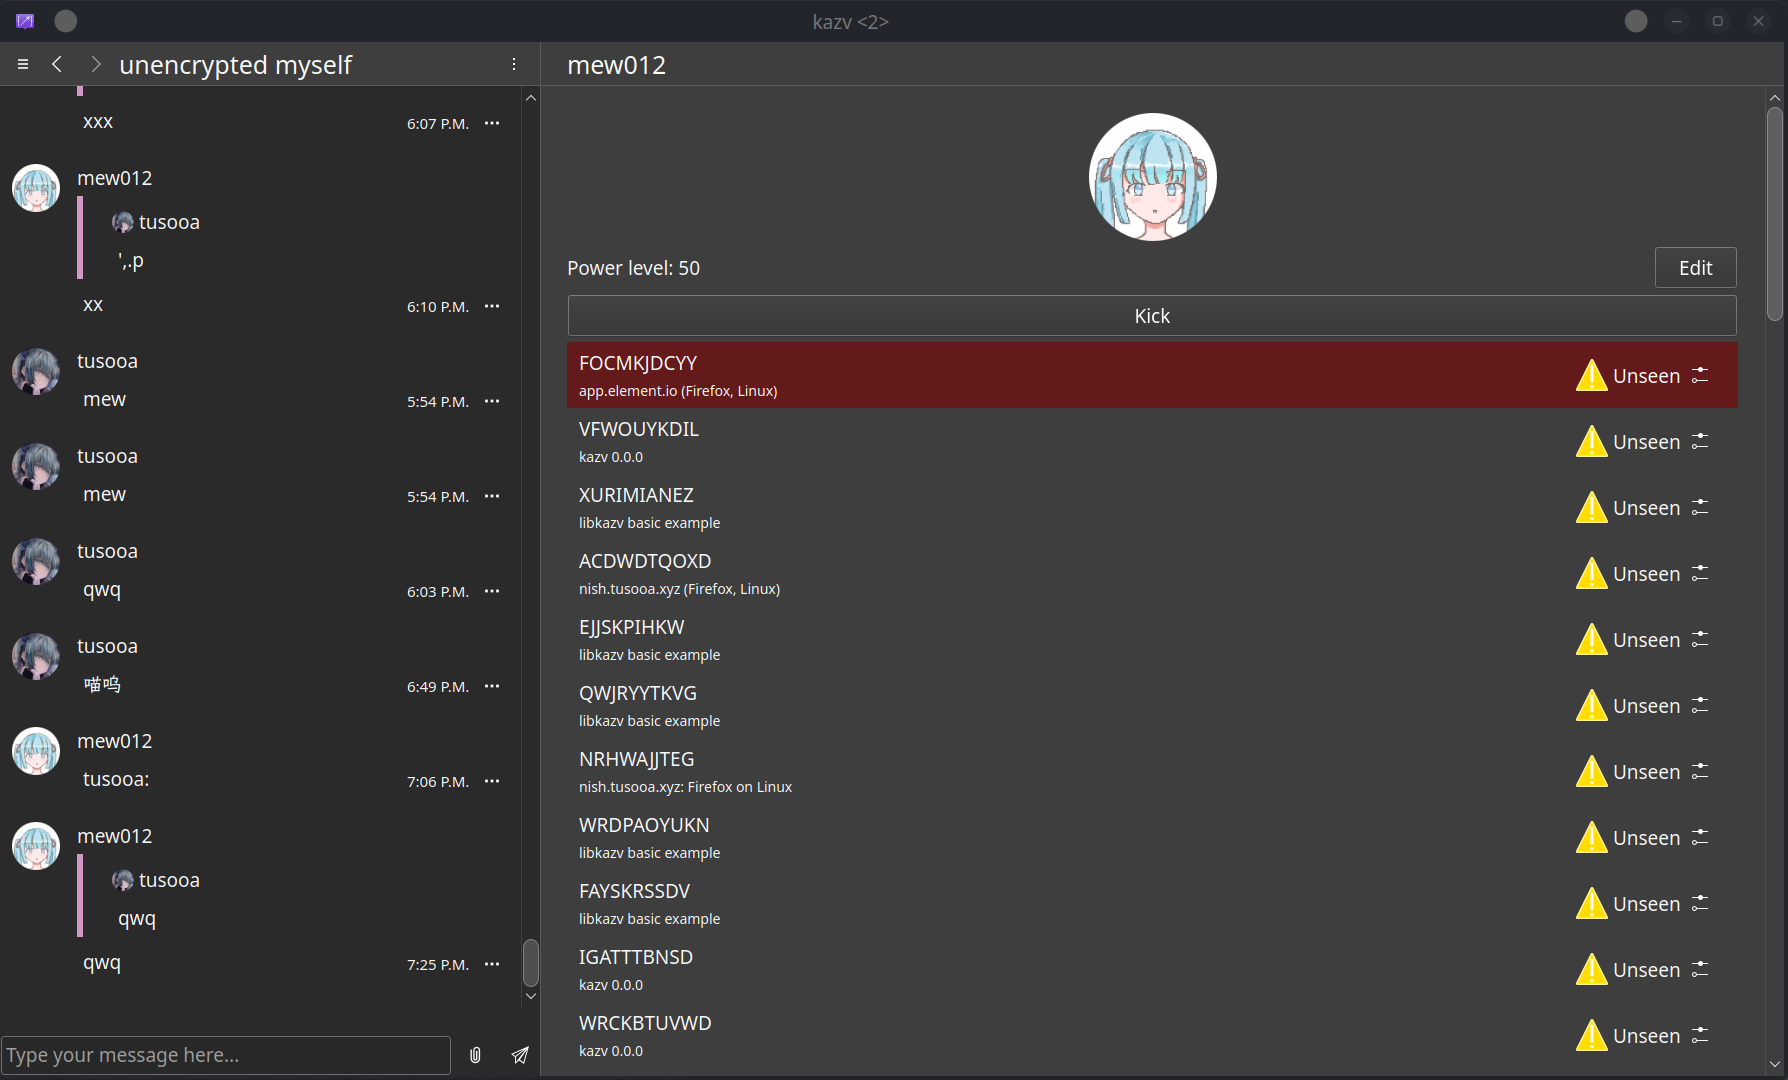 screenshot of kazv displaying the profile of a user